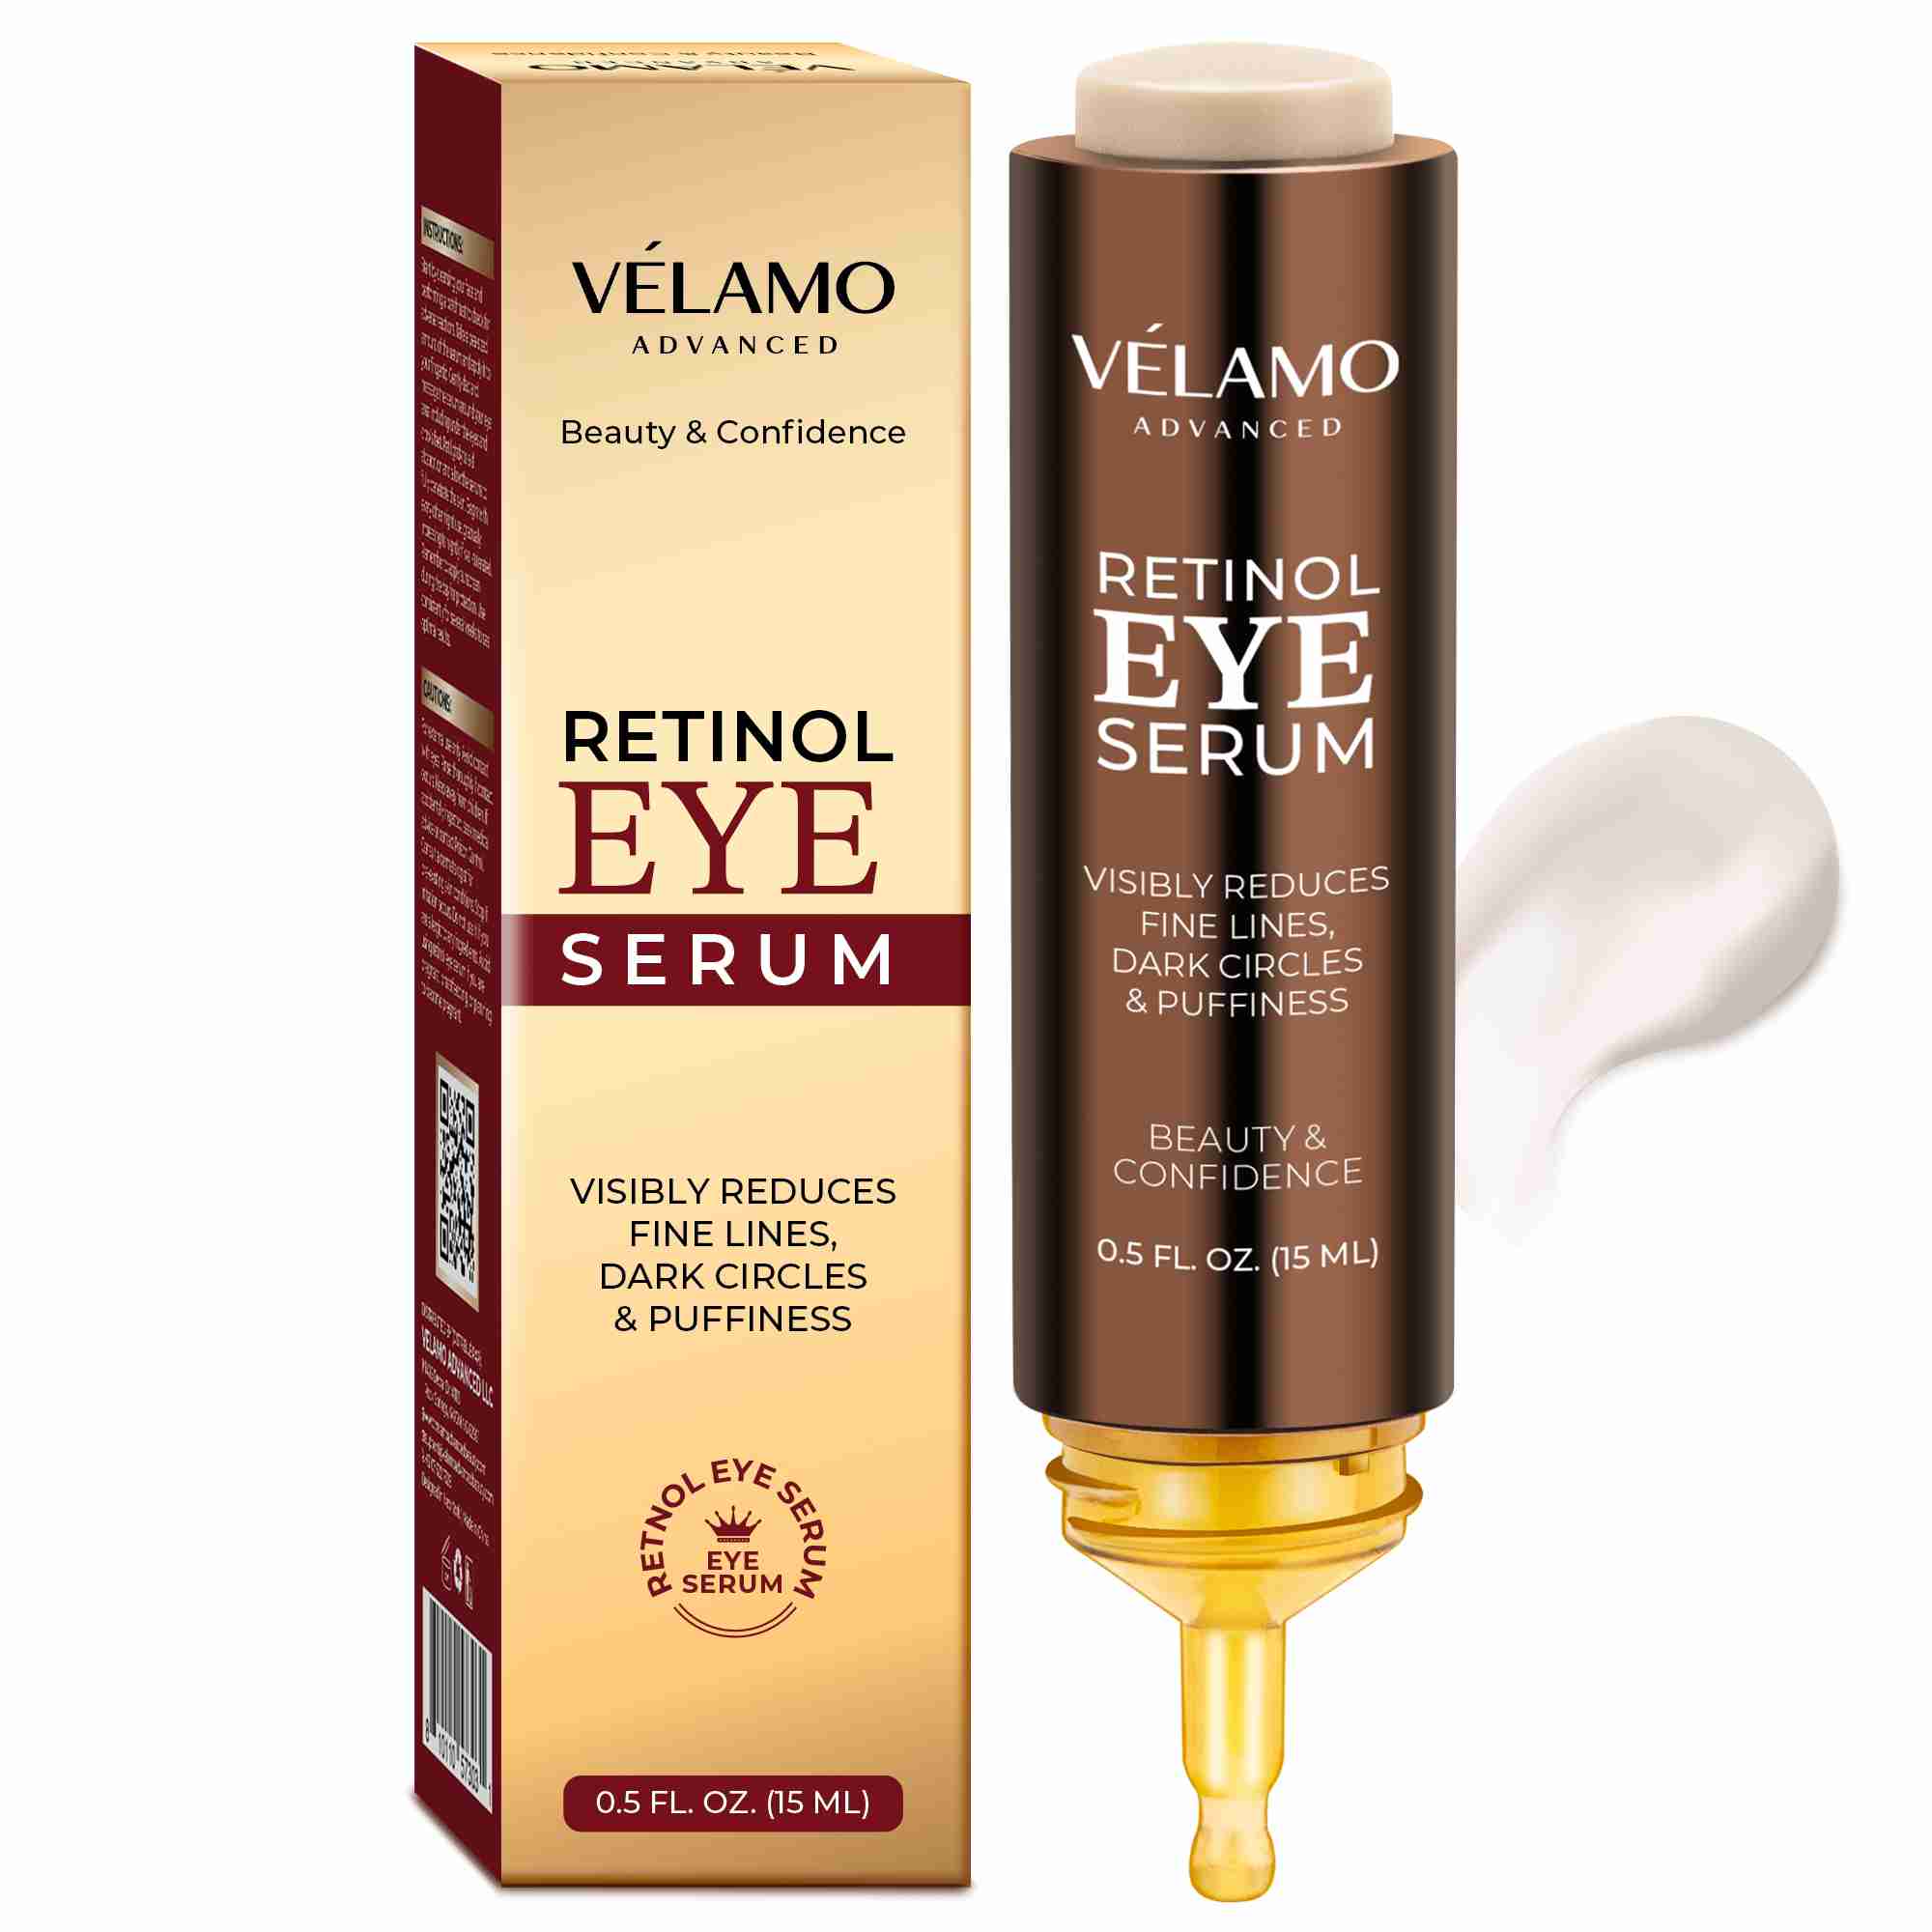 retinol-eye-serum with cash back rebate